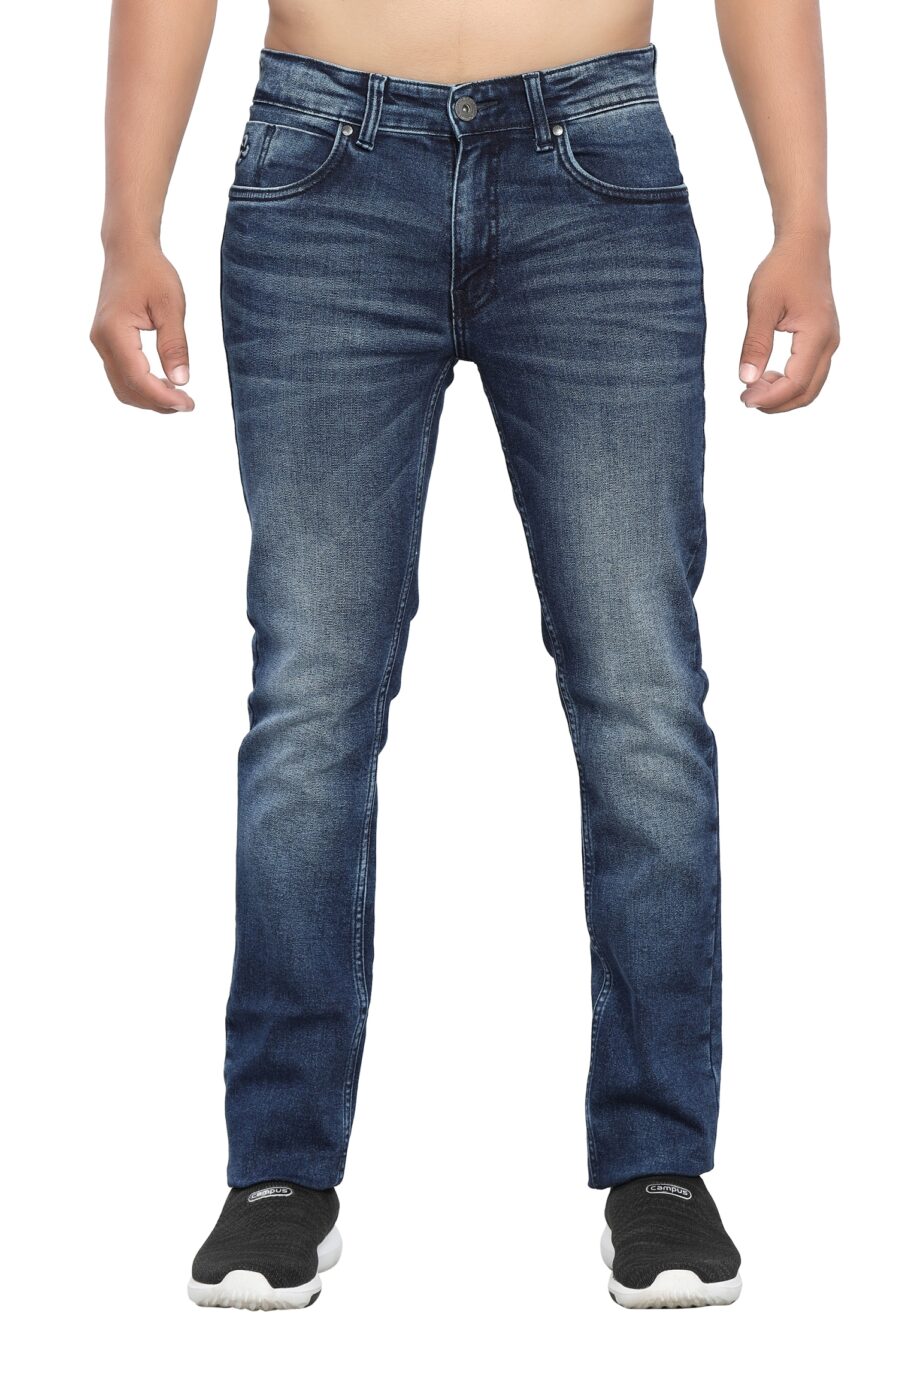 Stretchable blue jeans pant for men